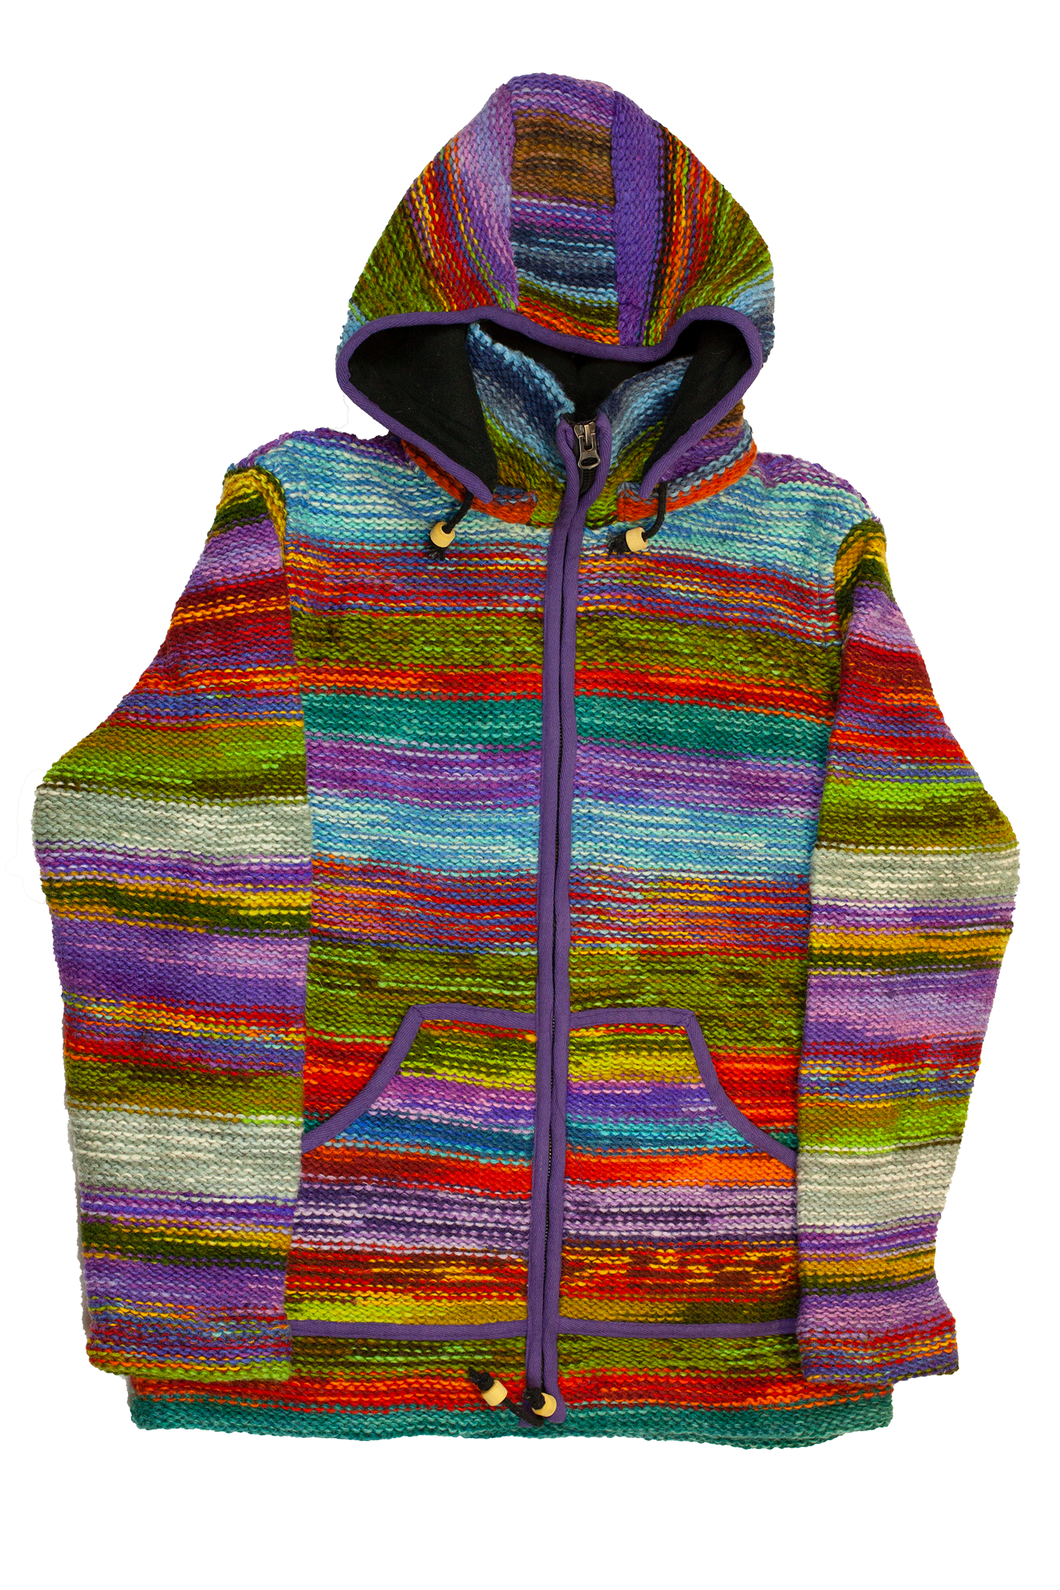 Hand knitted woolen jacket/sweater with soft inner fleece - HMPWJ3